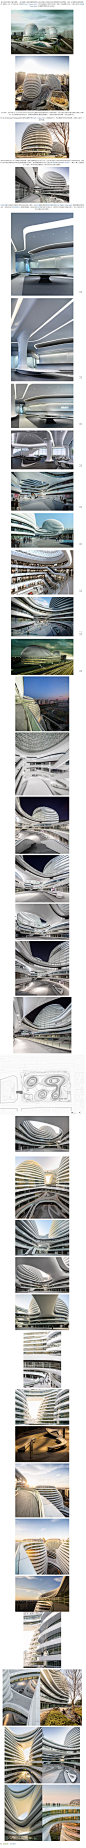 北京银河soho魅影 Galaxy Soho by FG+SG Architectural...jpg